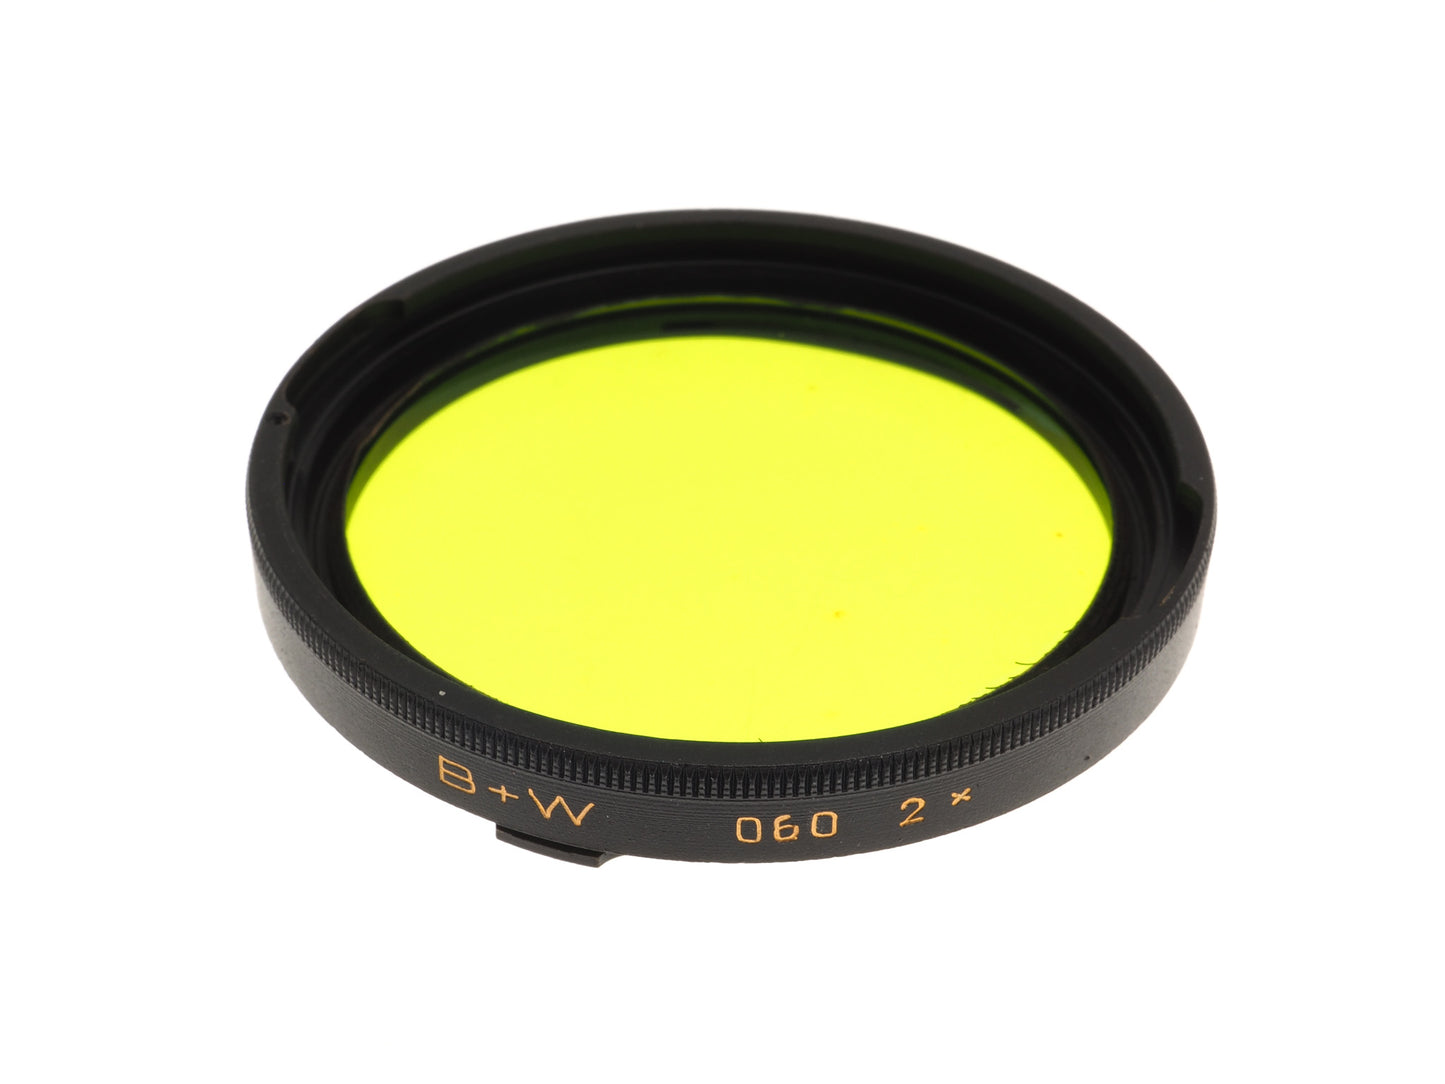 B+W B50 Green-Yellow 060 Filter - Accessory